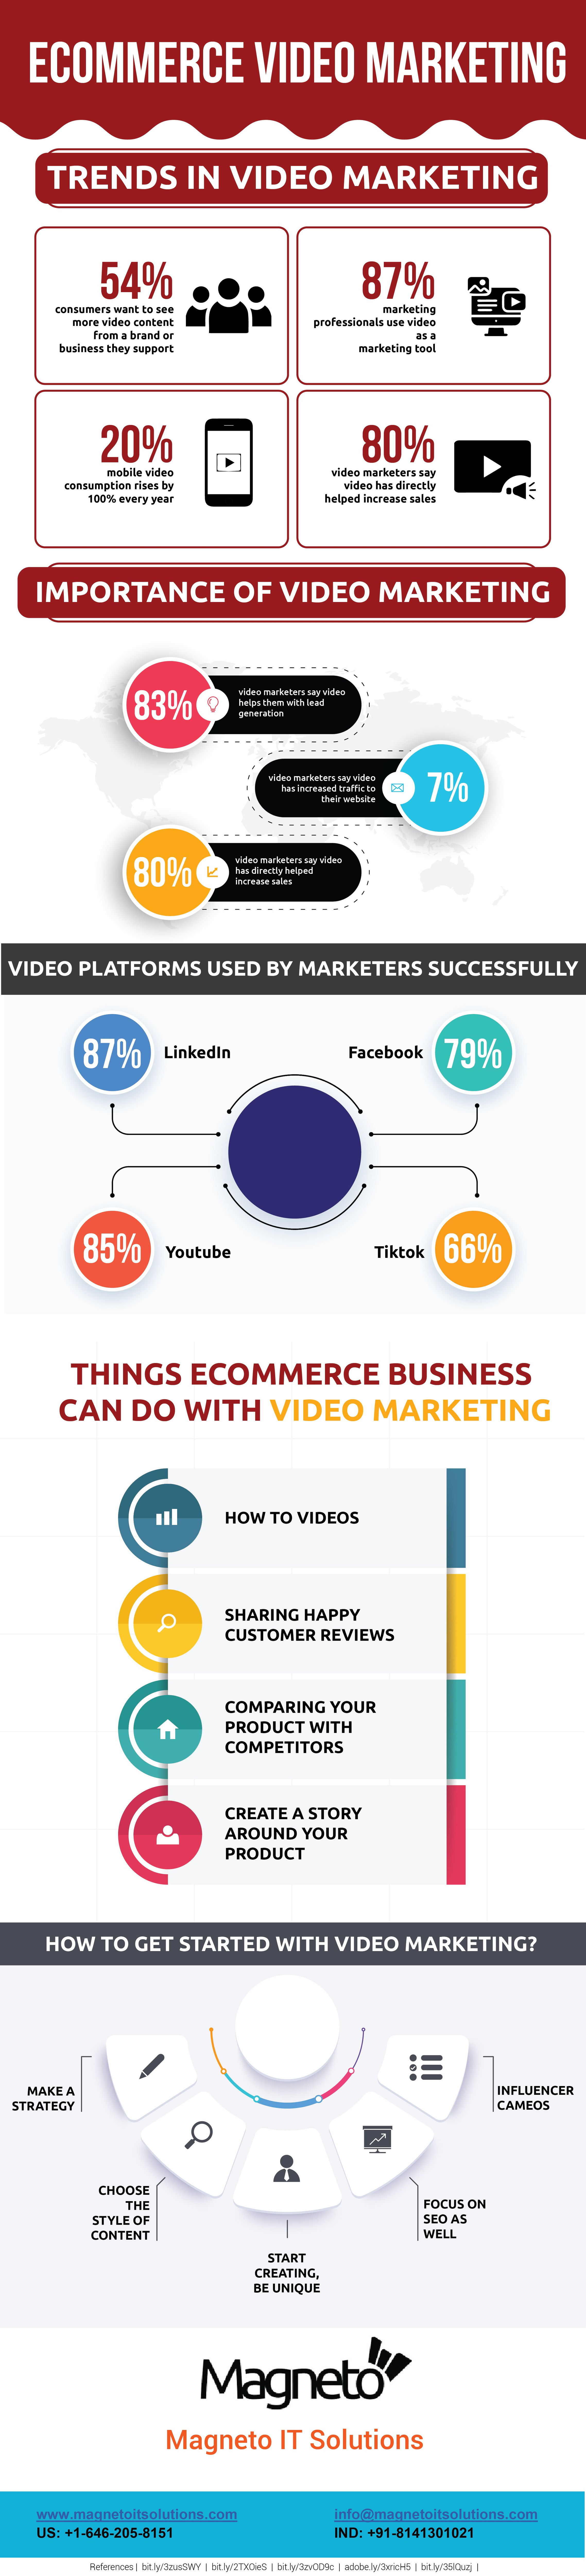 eCommerce Video Marketing Infographic